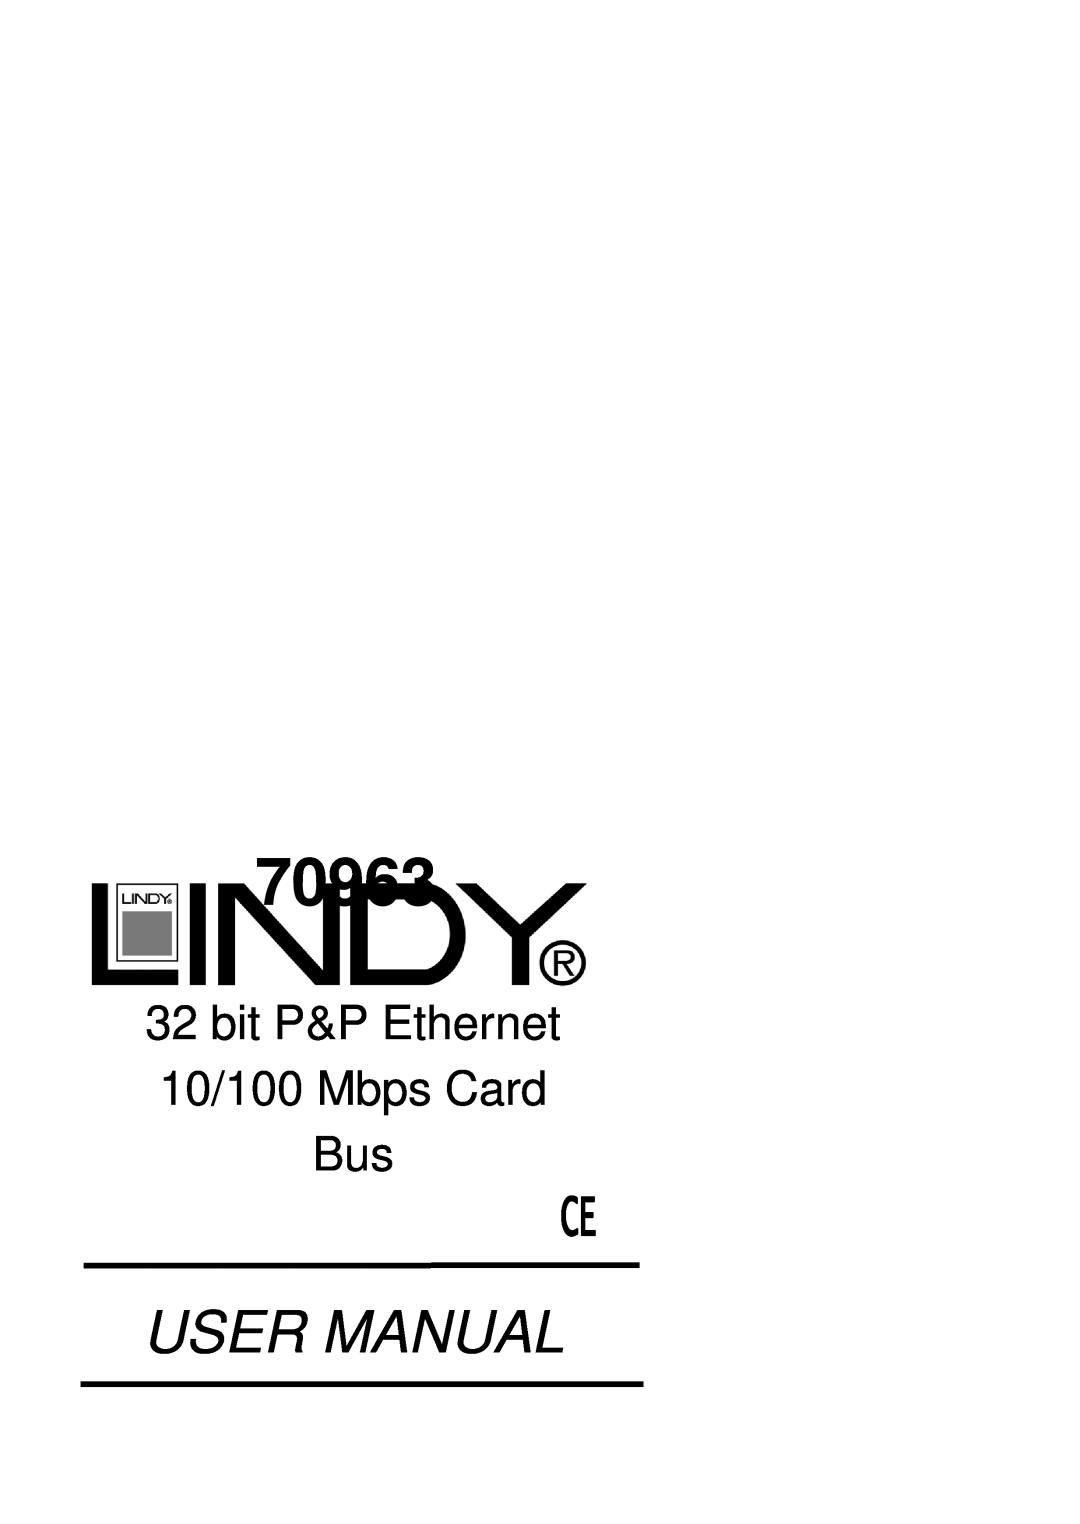 Lindy 70963 user manual User Manual, bit P&P Ethernet 10/100 Mbps Card Bus 